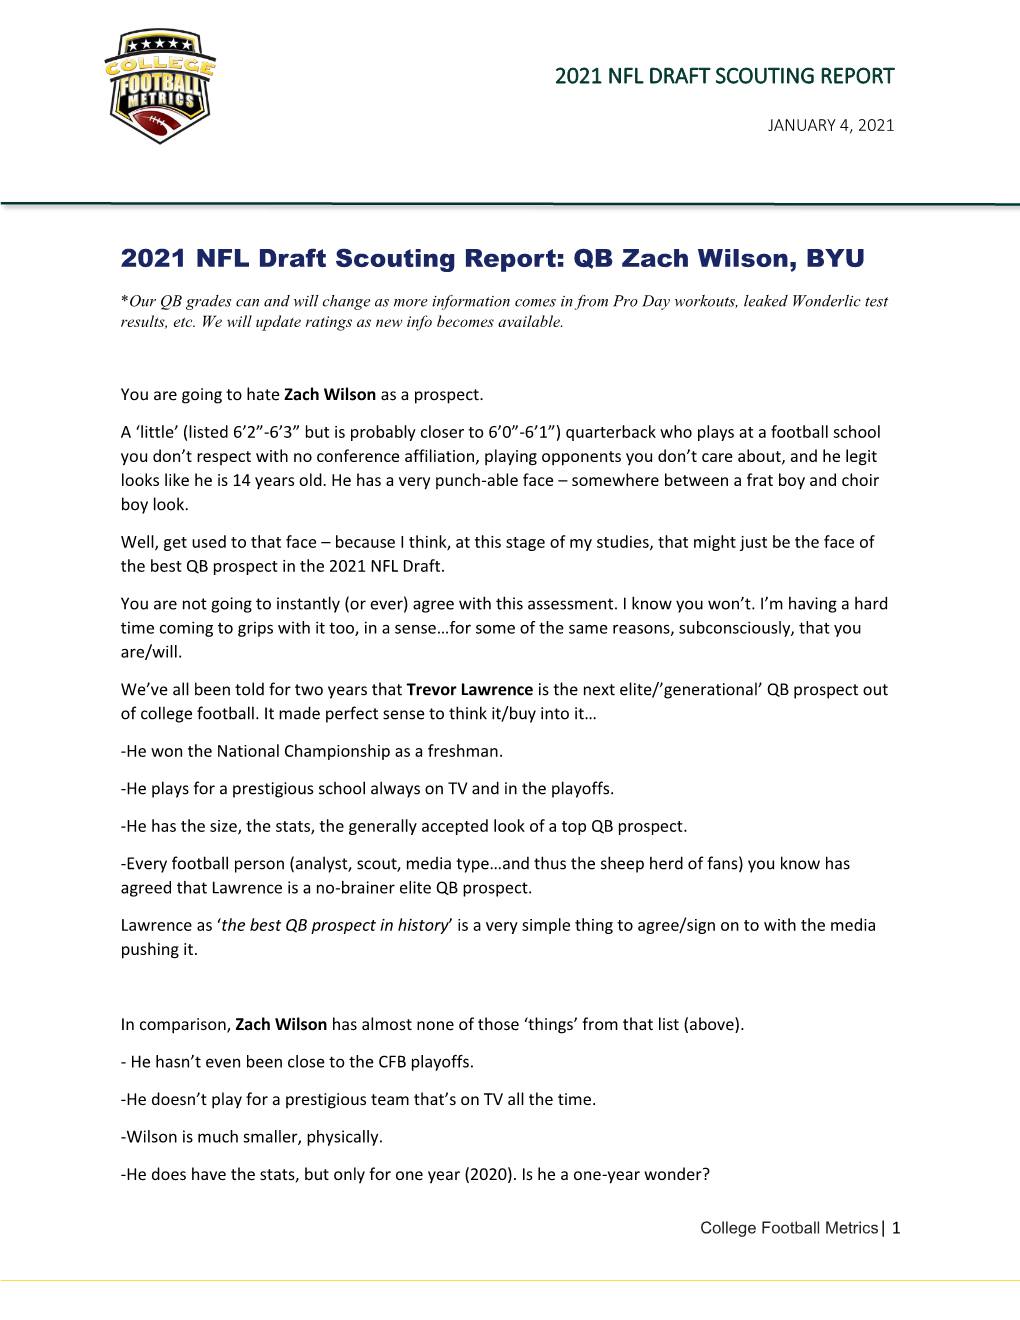 2021 NFL Draft Scouting Report: QB Zach Wilson, BYU